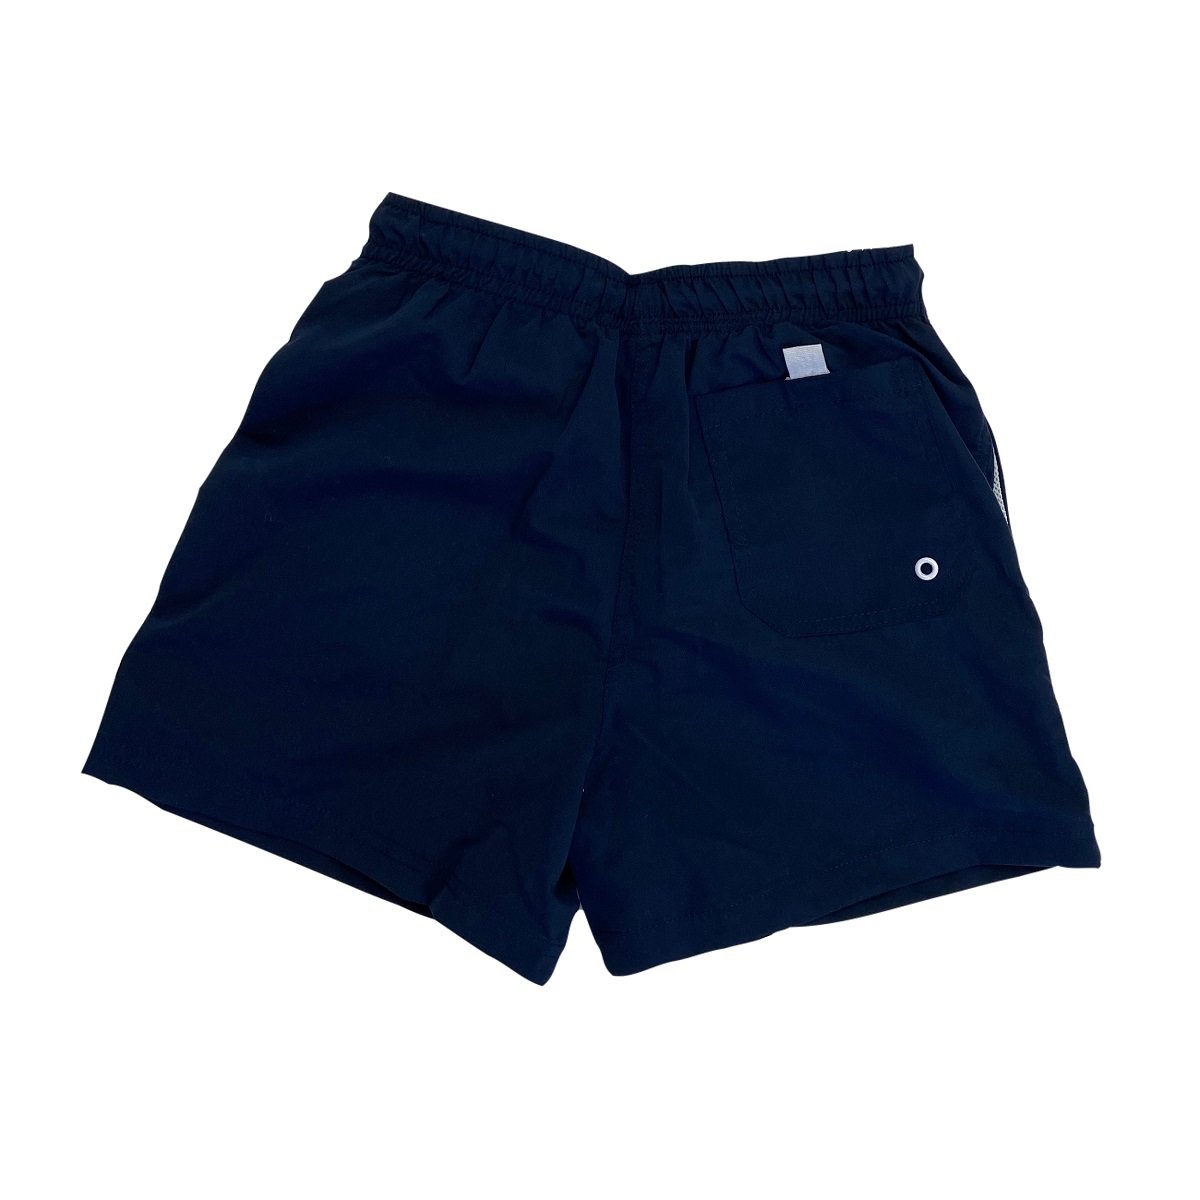 Buy the Swim shorts online at Sunderland AFC Store